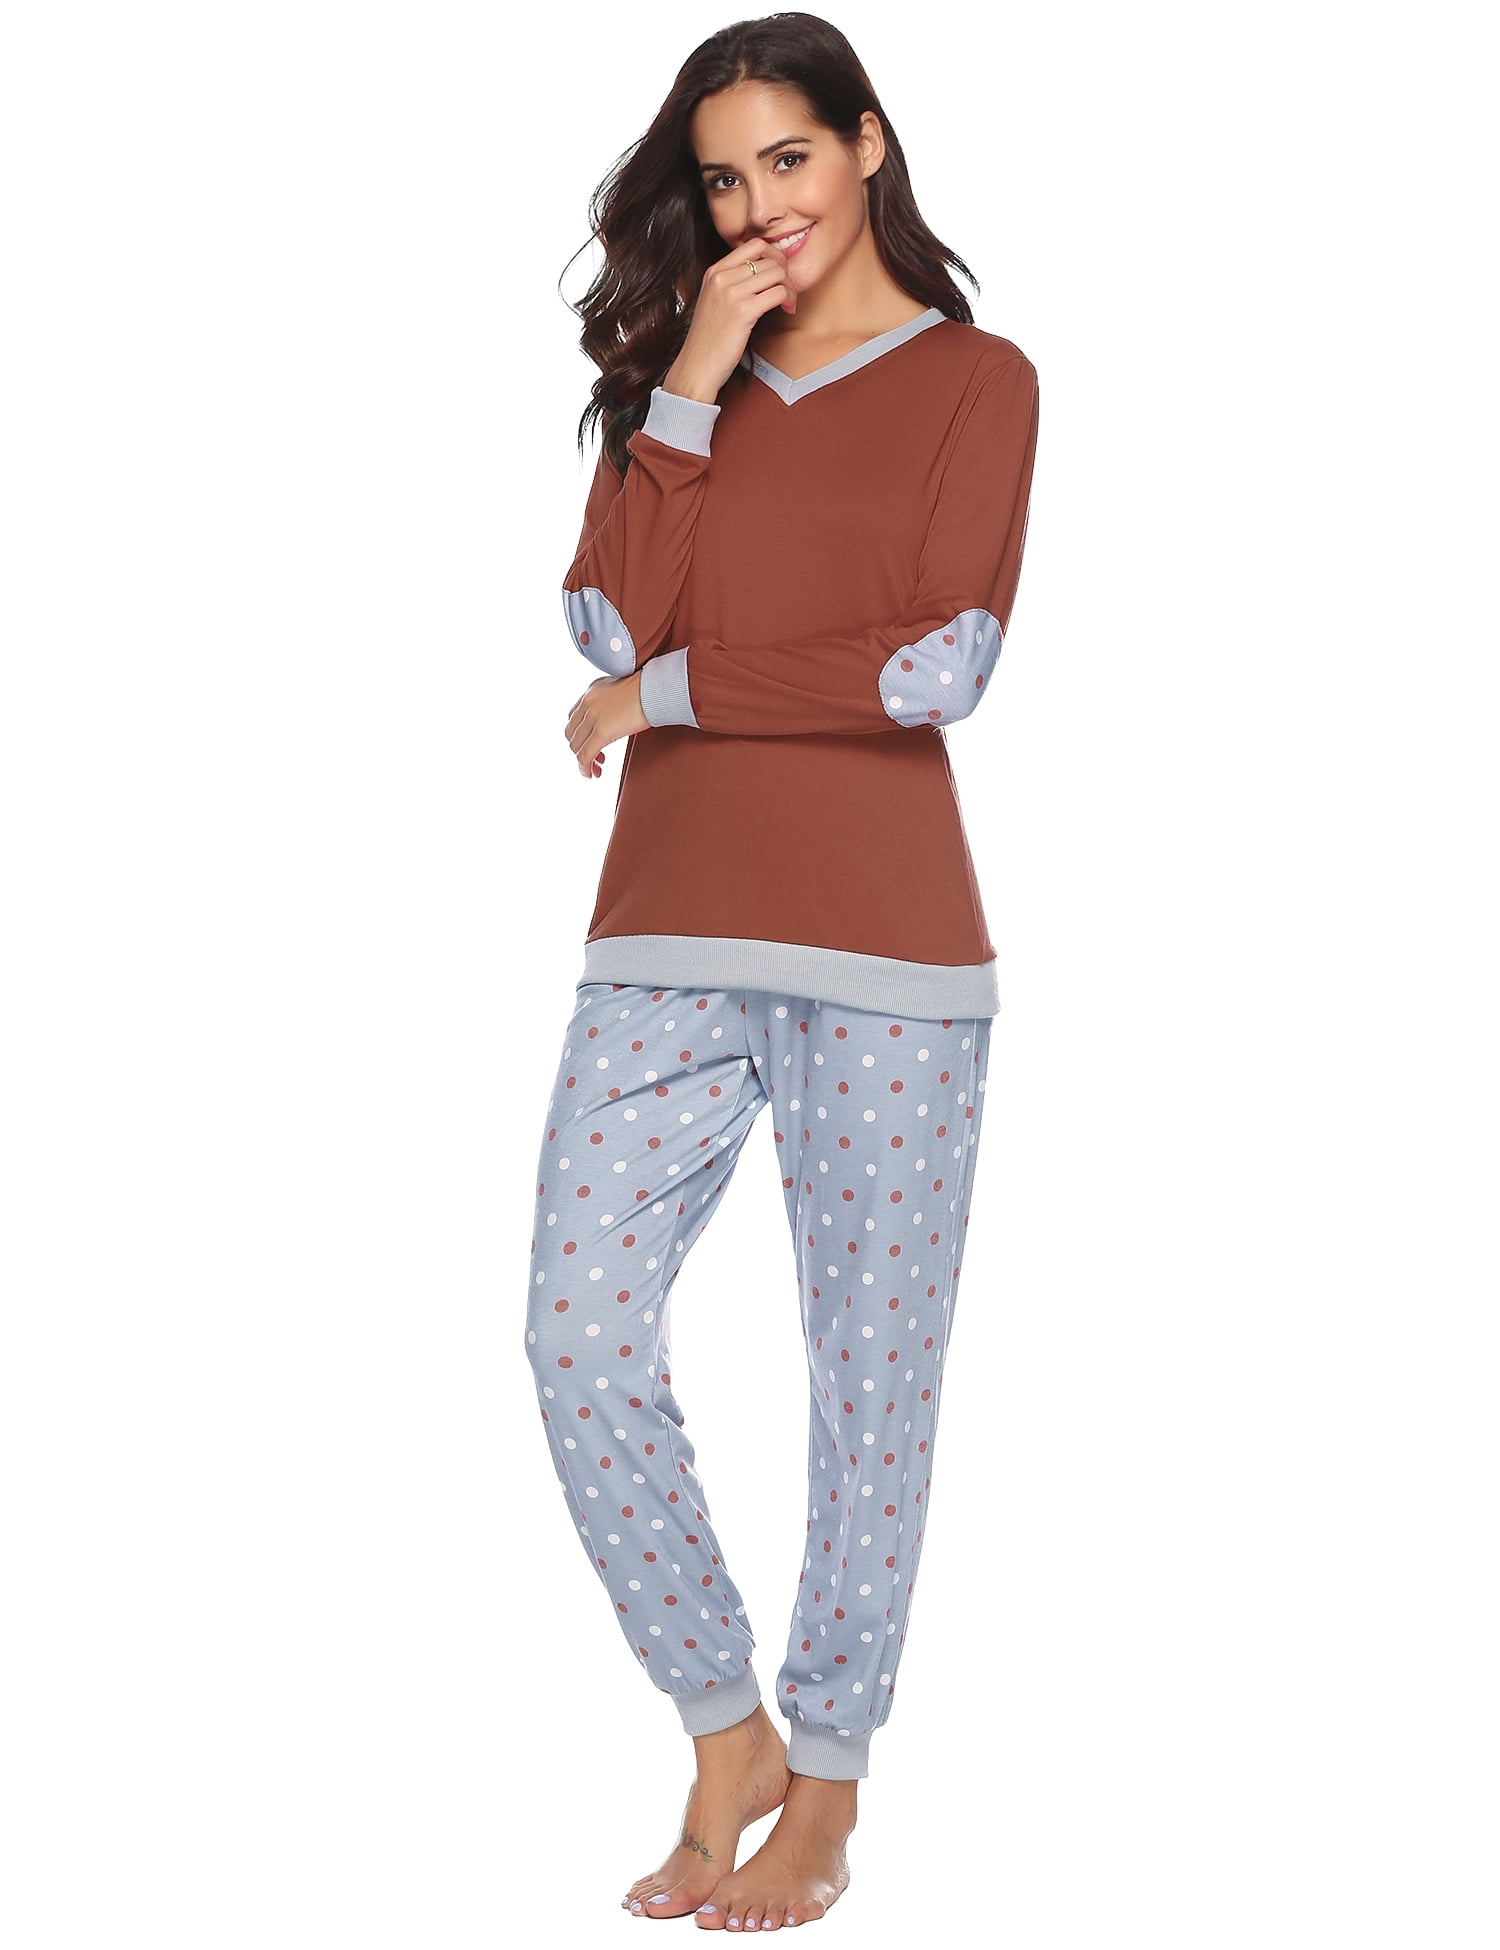 Hawiton Womens Pyjamas Set,Sleepwear Cotton Short Sleeve V-Neck Shirt and Capri Pants 